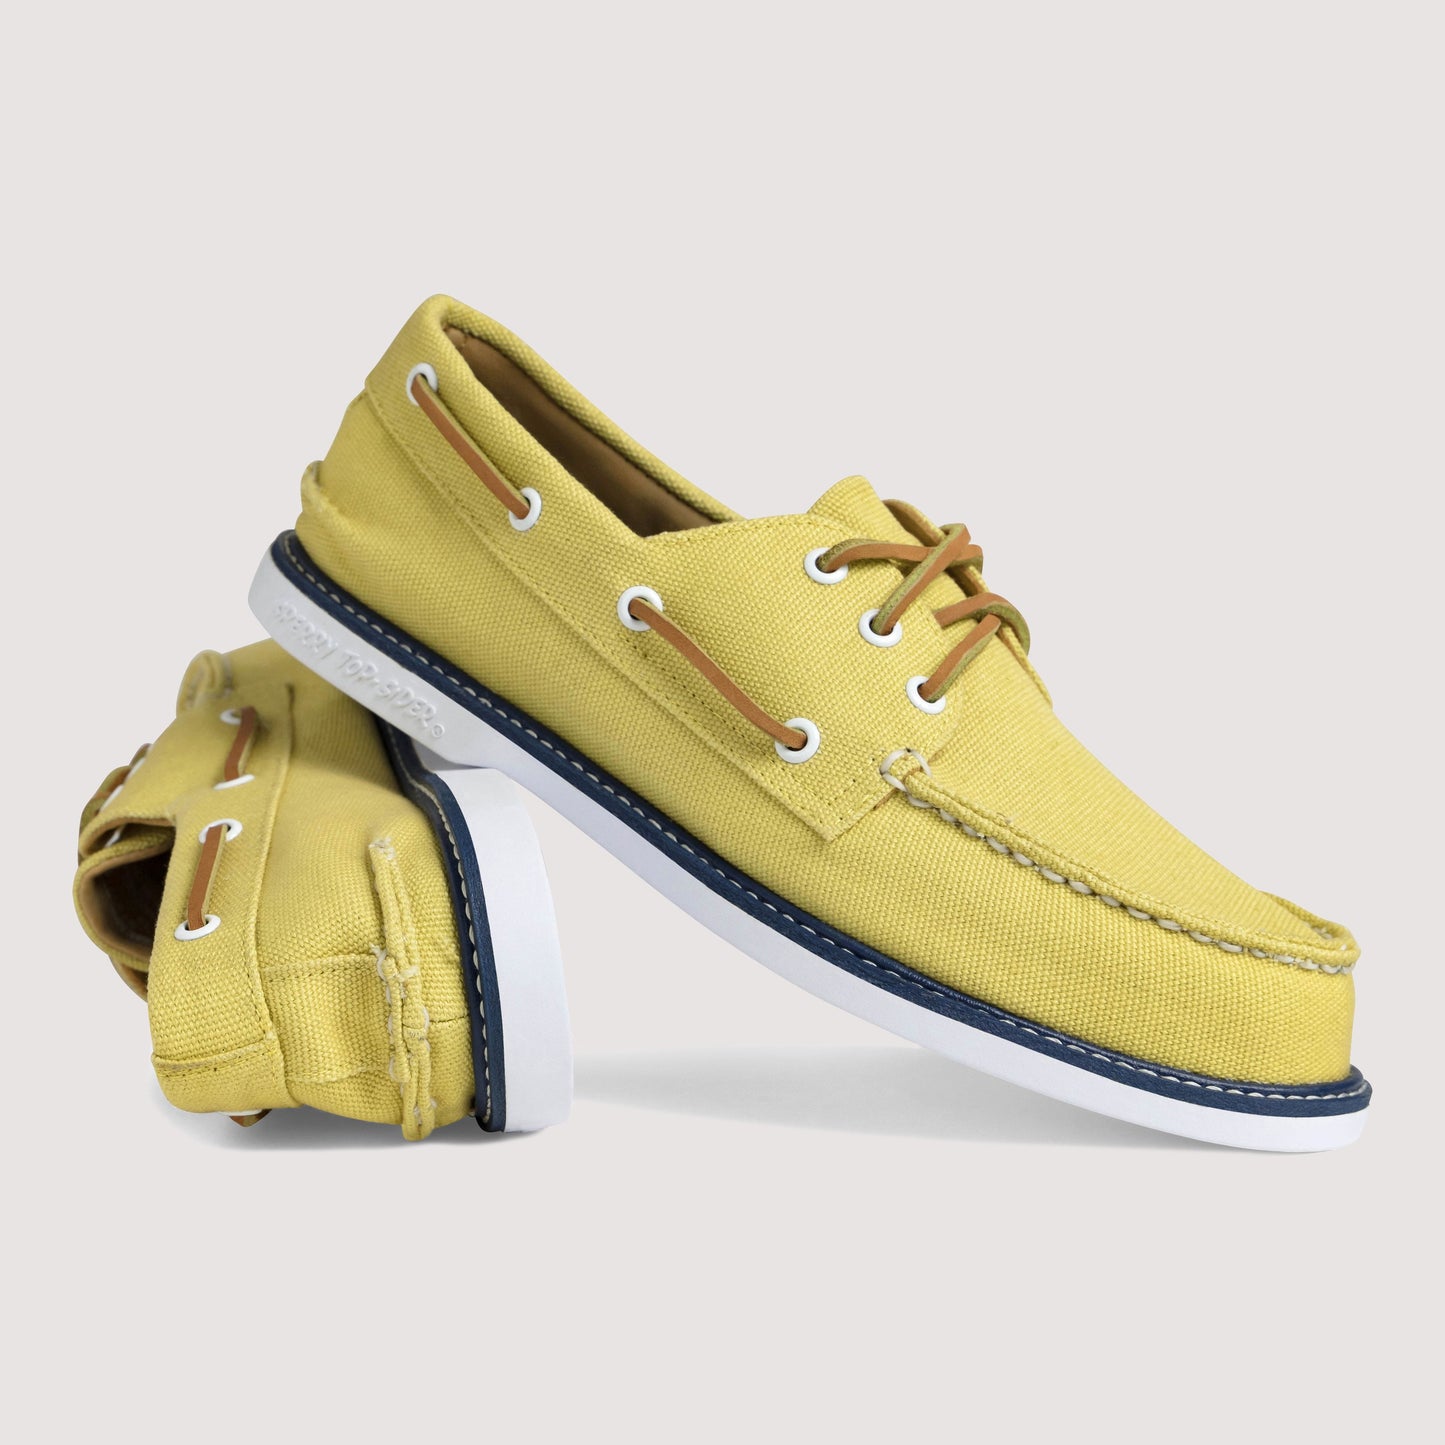 Men's Authentic Original 3-Eye Canvas Boat Shoe Yellow